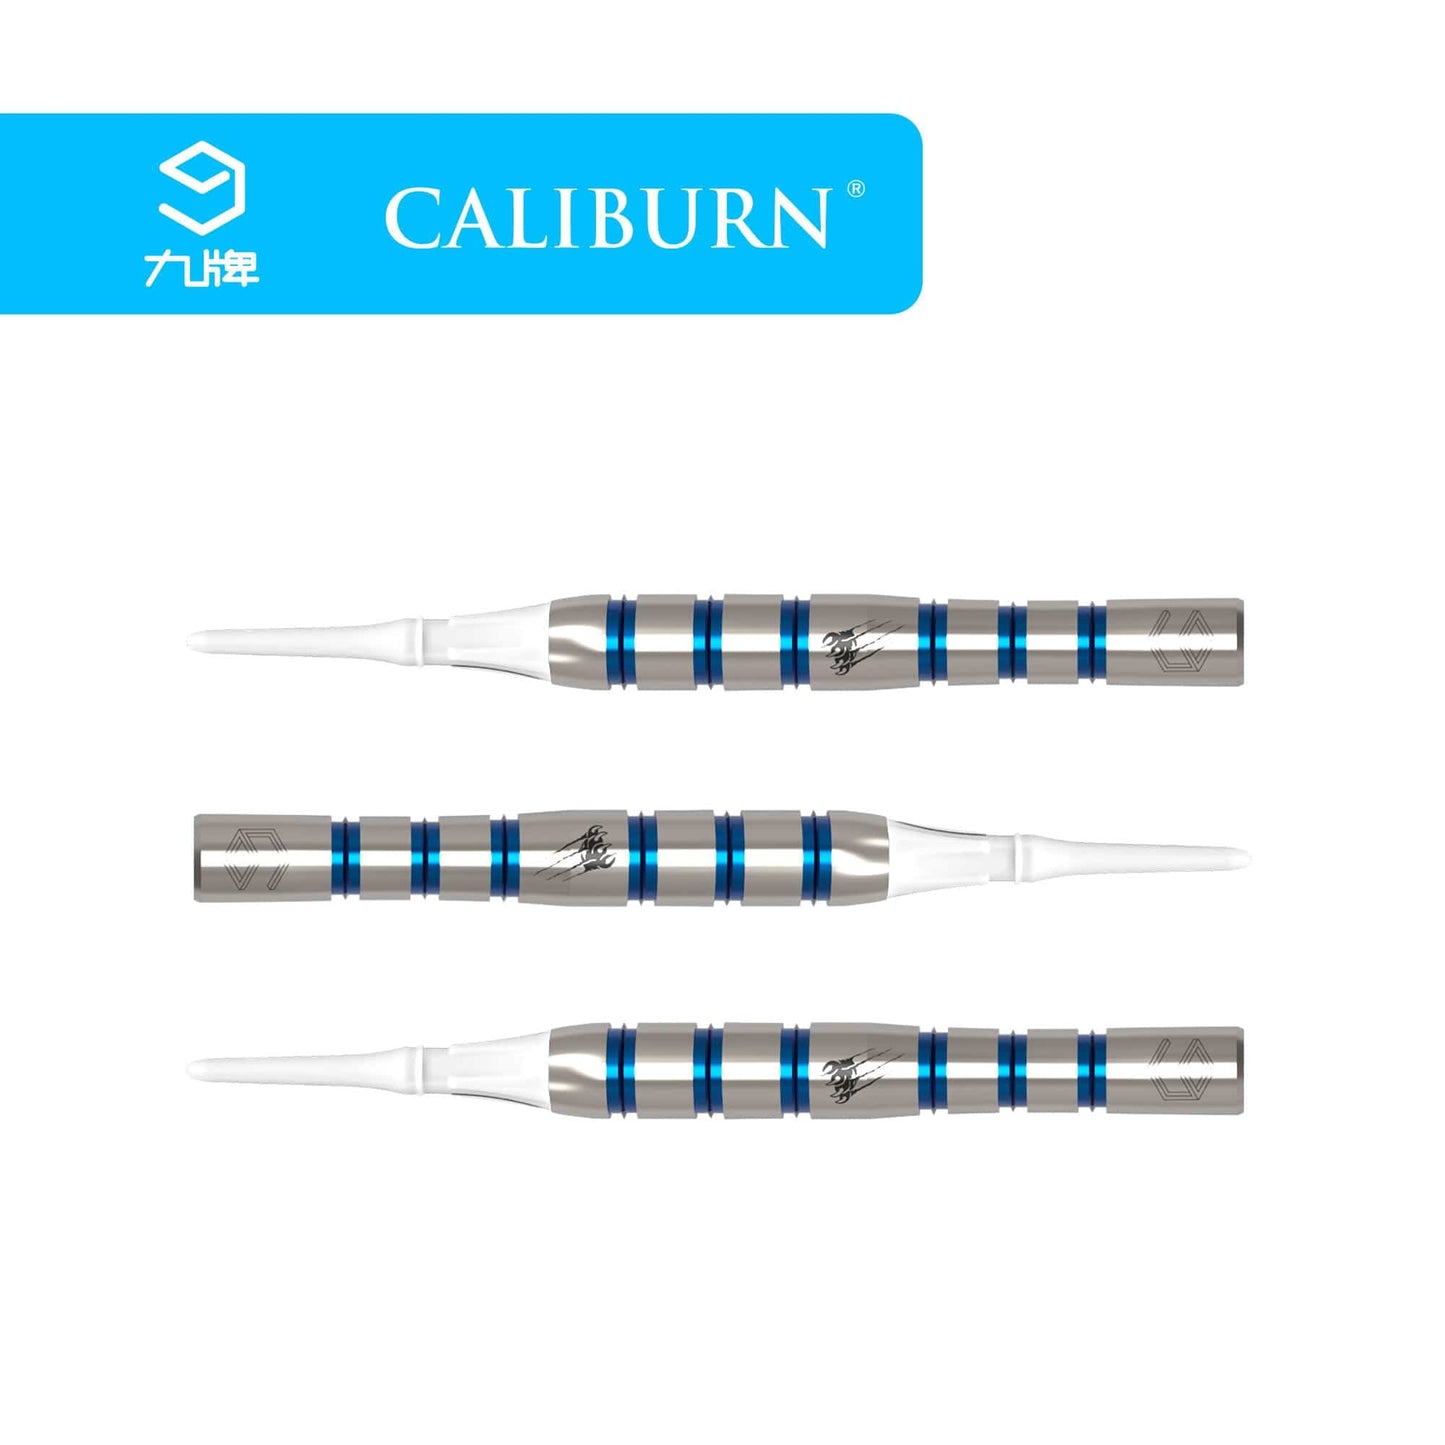 Caliburn Player Darts - Soft Tip - 90% - Blue Ring - Ice Cat 19g